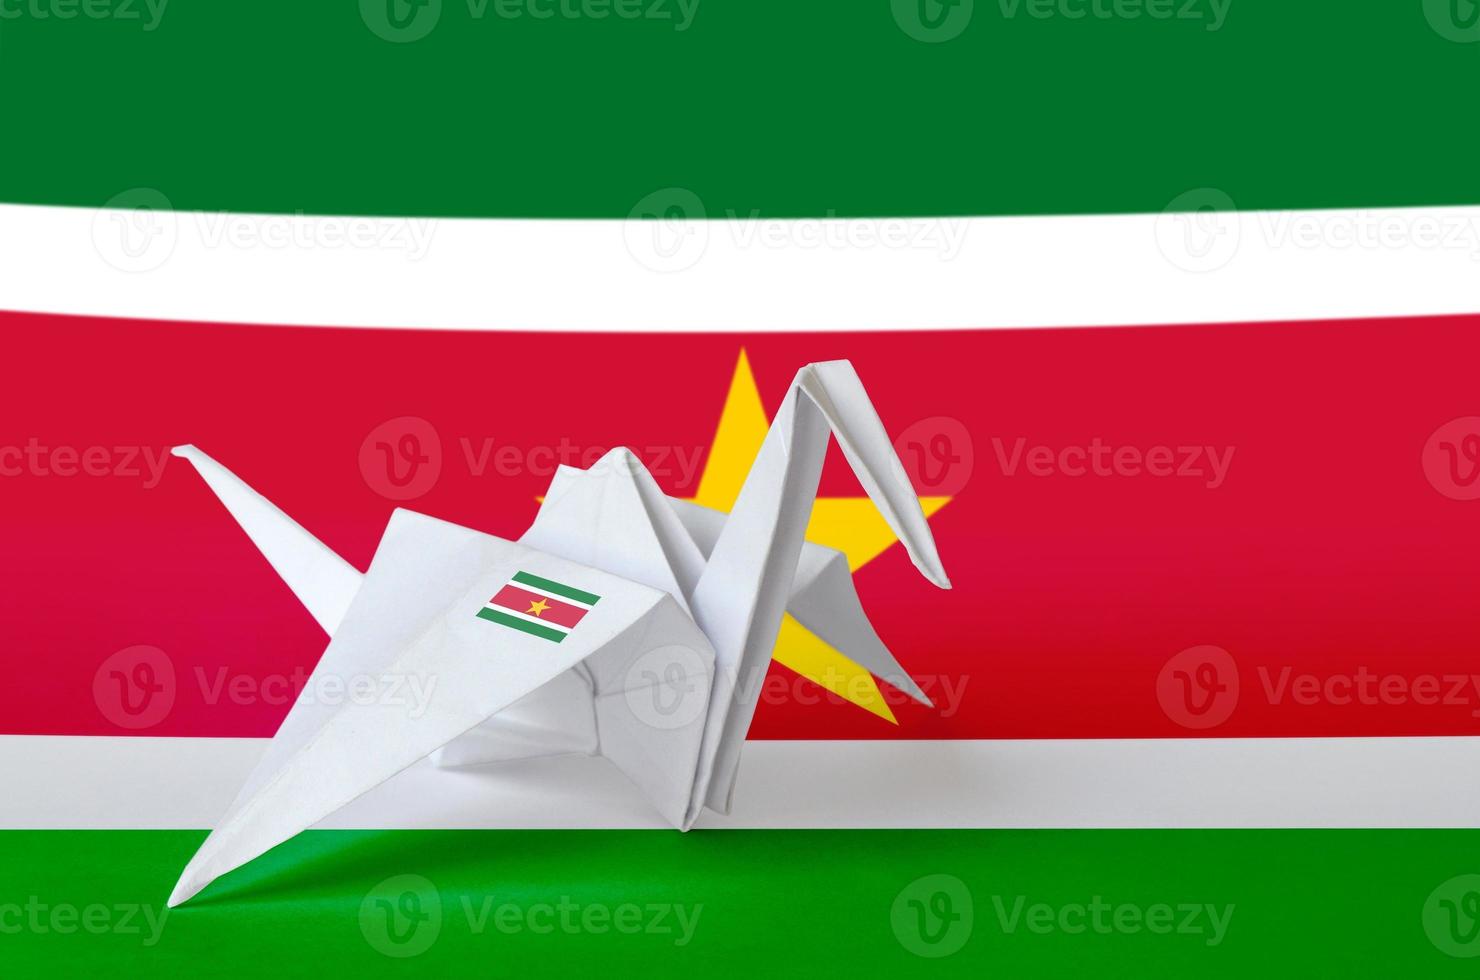 suriname flagga avbildad på papper origami kran vinge. handgjort konst begrepp foto